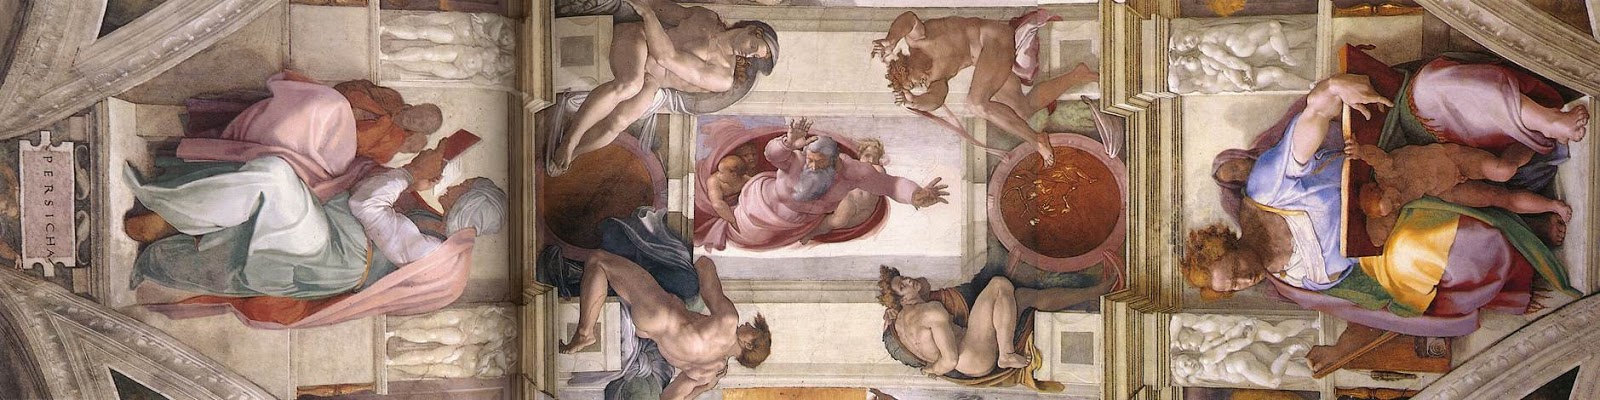 Michelangelo+Buonarroti-1475-1564 (370).jpg